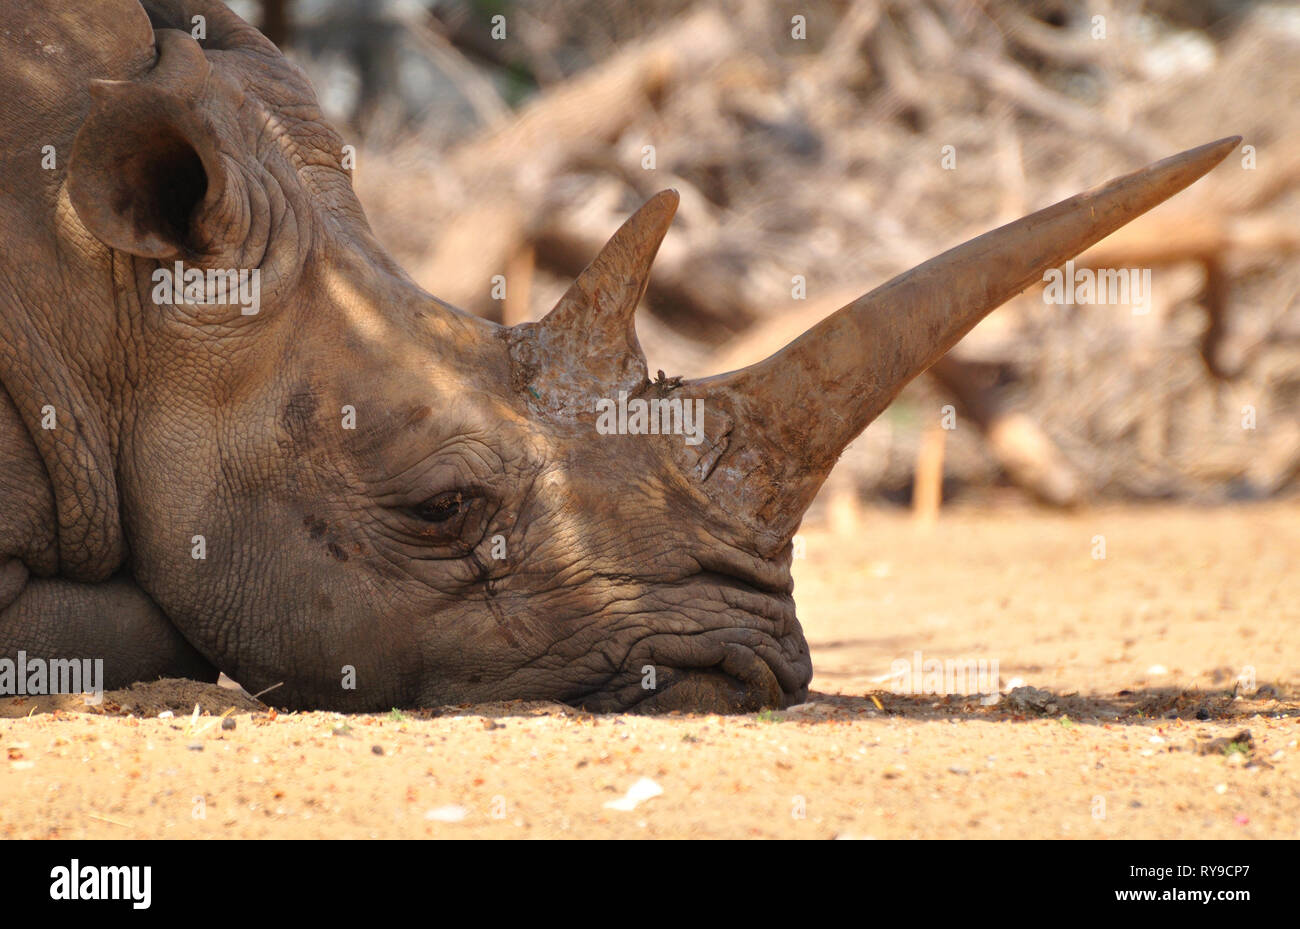 Rhino in safari park. Israel. Stock Photo